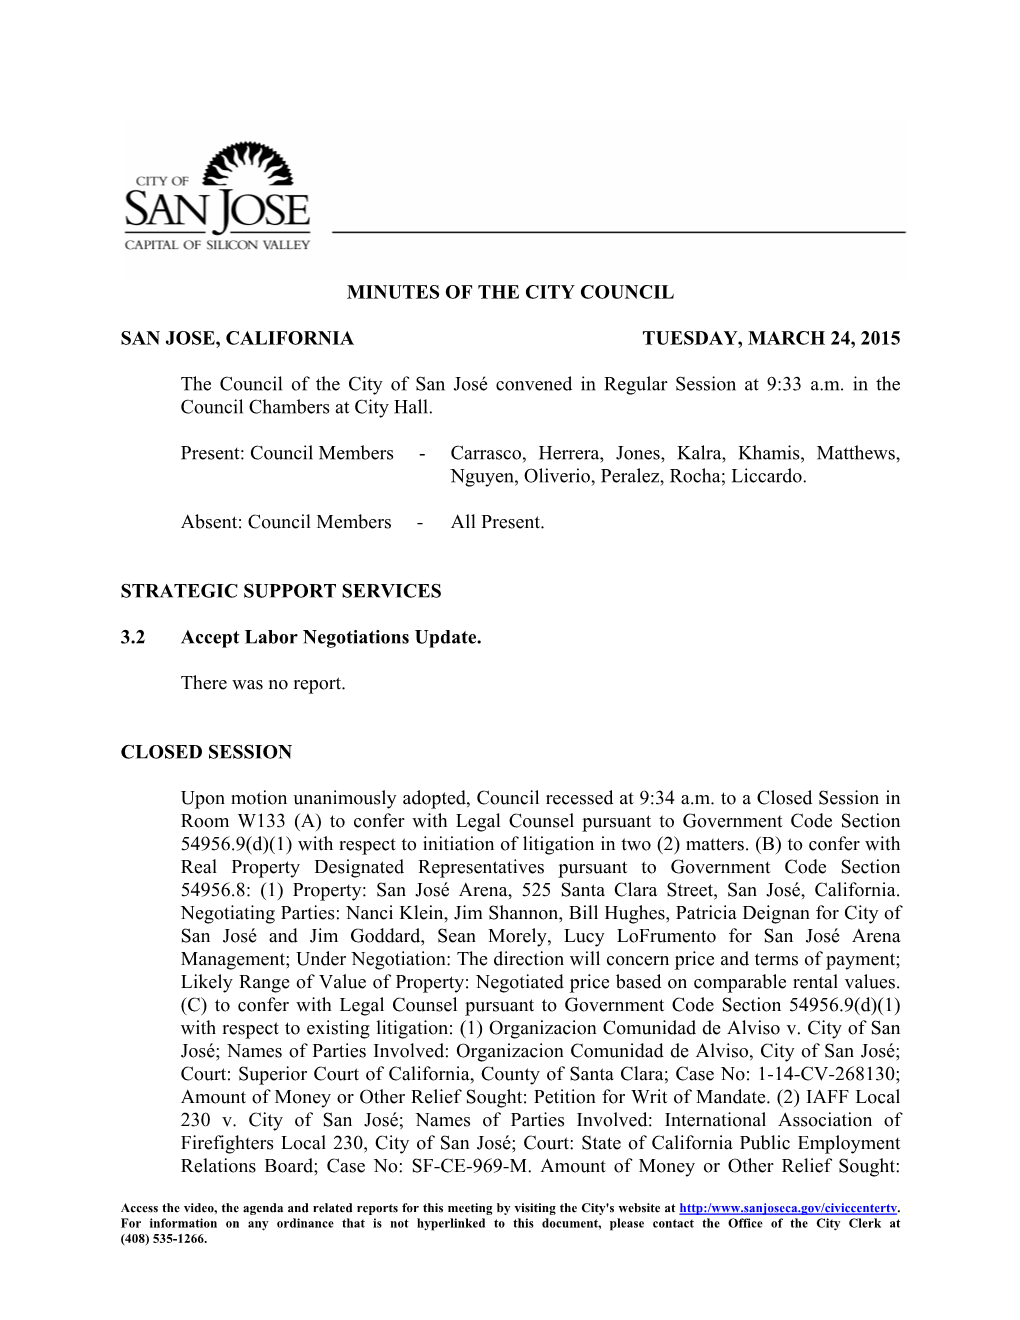 Minutes of the City Council San Jose, California